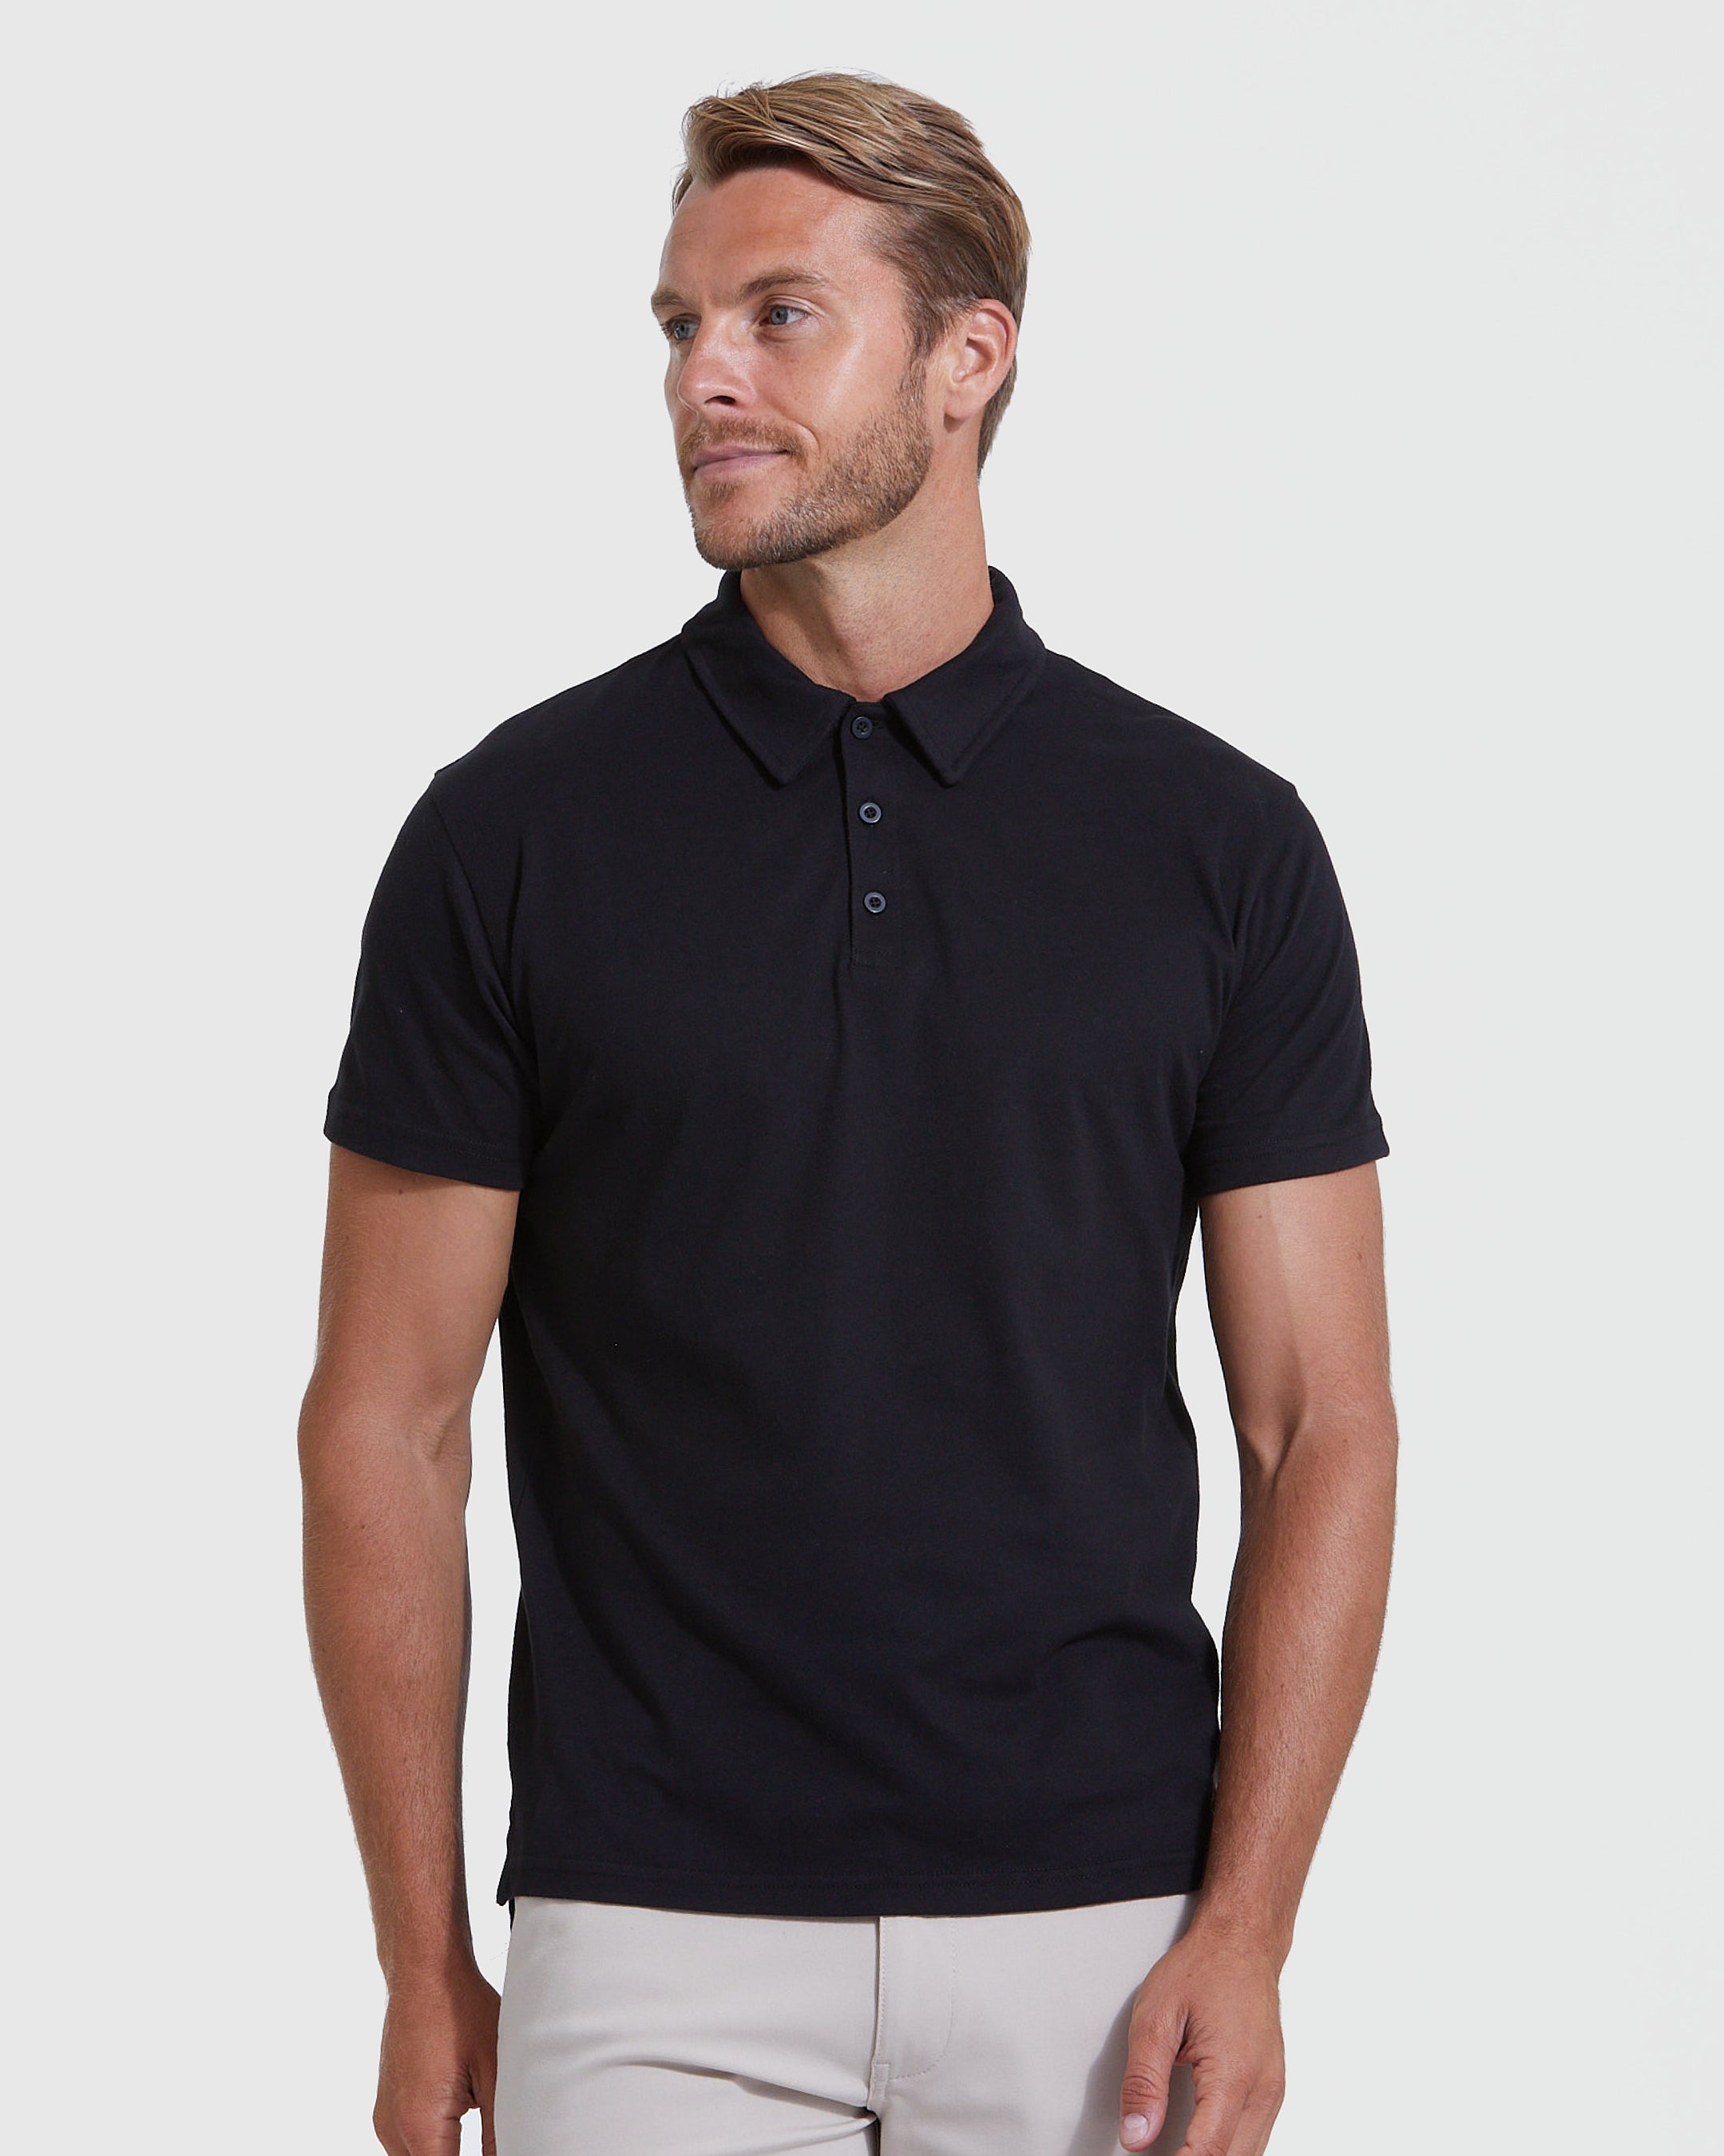 Black Polo Shirts | Men's Black Polo | True Classic